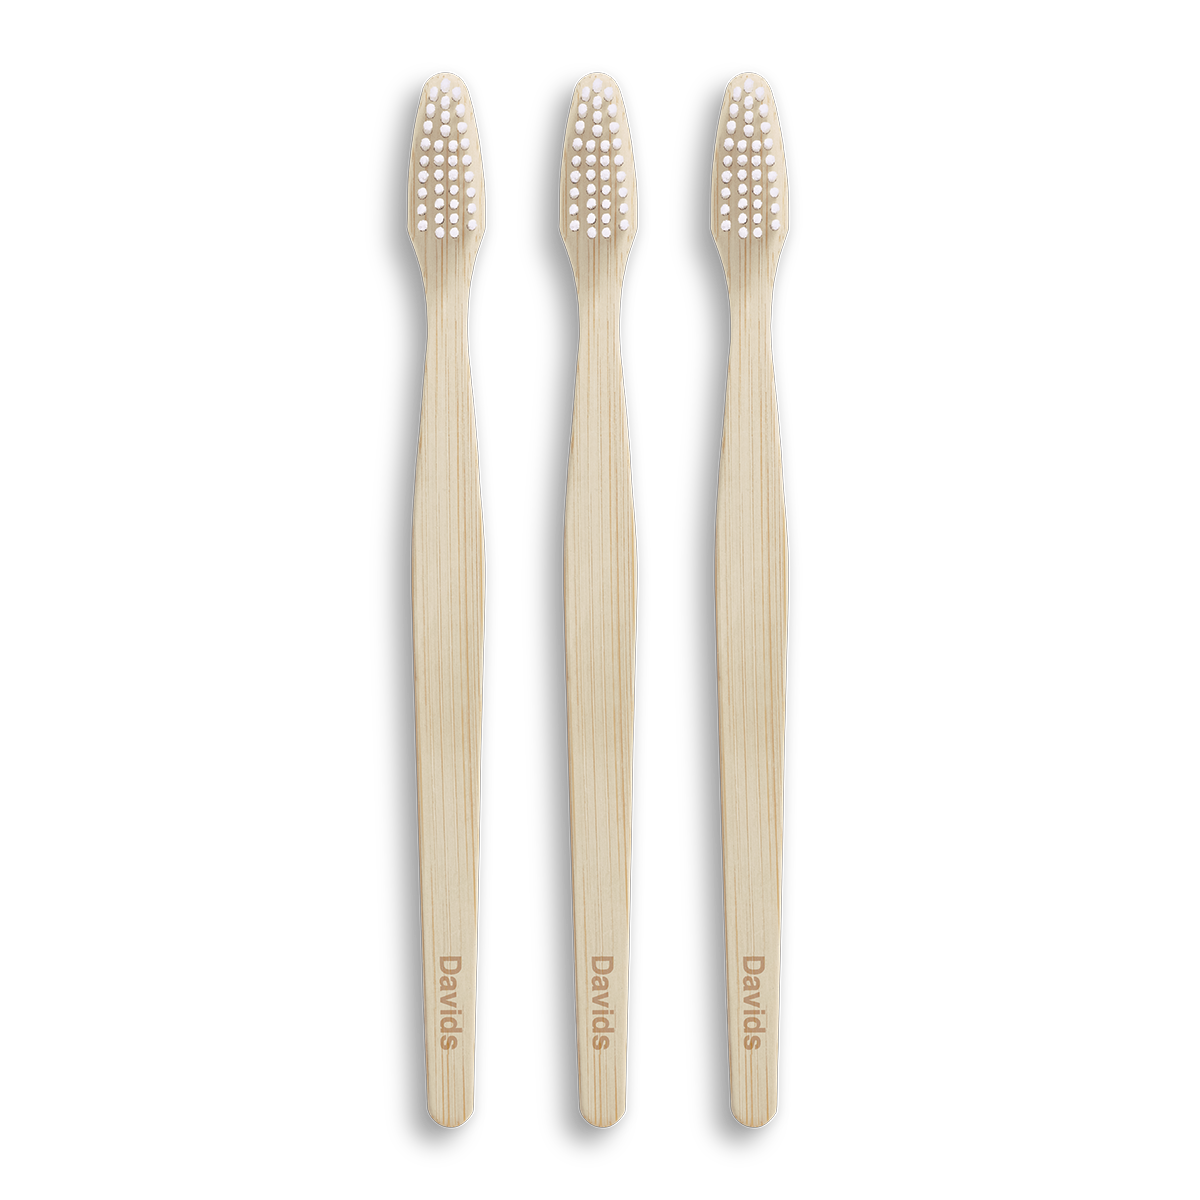 Davids premium bamboo toothbrush / adult soft / 3 pack